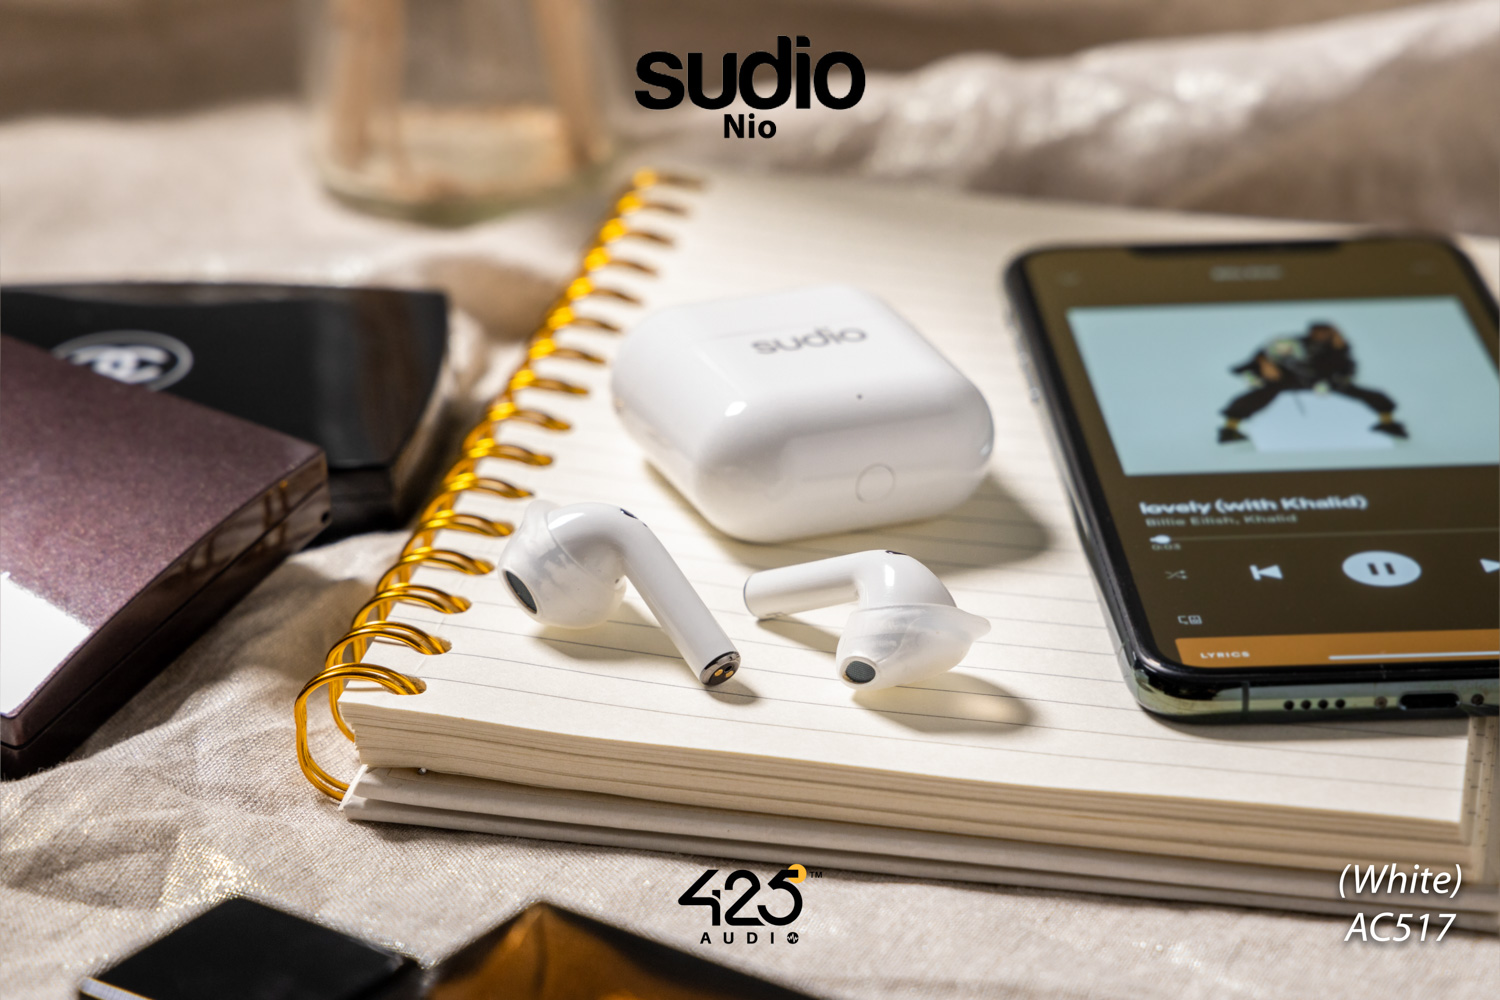 sudio nio,true wireless,earbud,bluetooth 5.0,adaptive dual-mic,คุยโทรศัพท์ชัด,white,black,green,ipx4,หูฟังไร้สาย,คุยโทรศัพท์ชัด